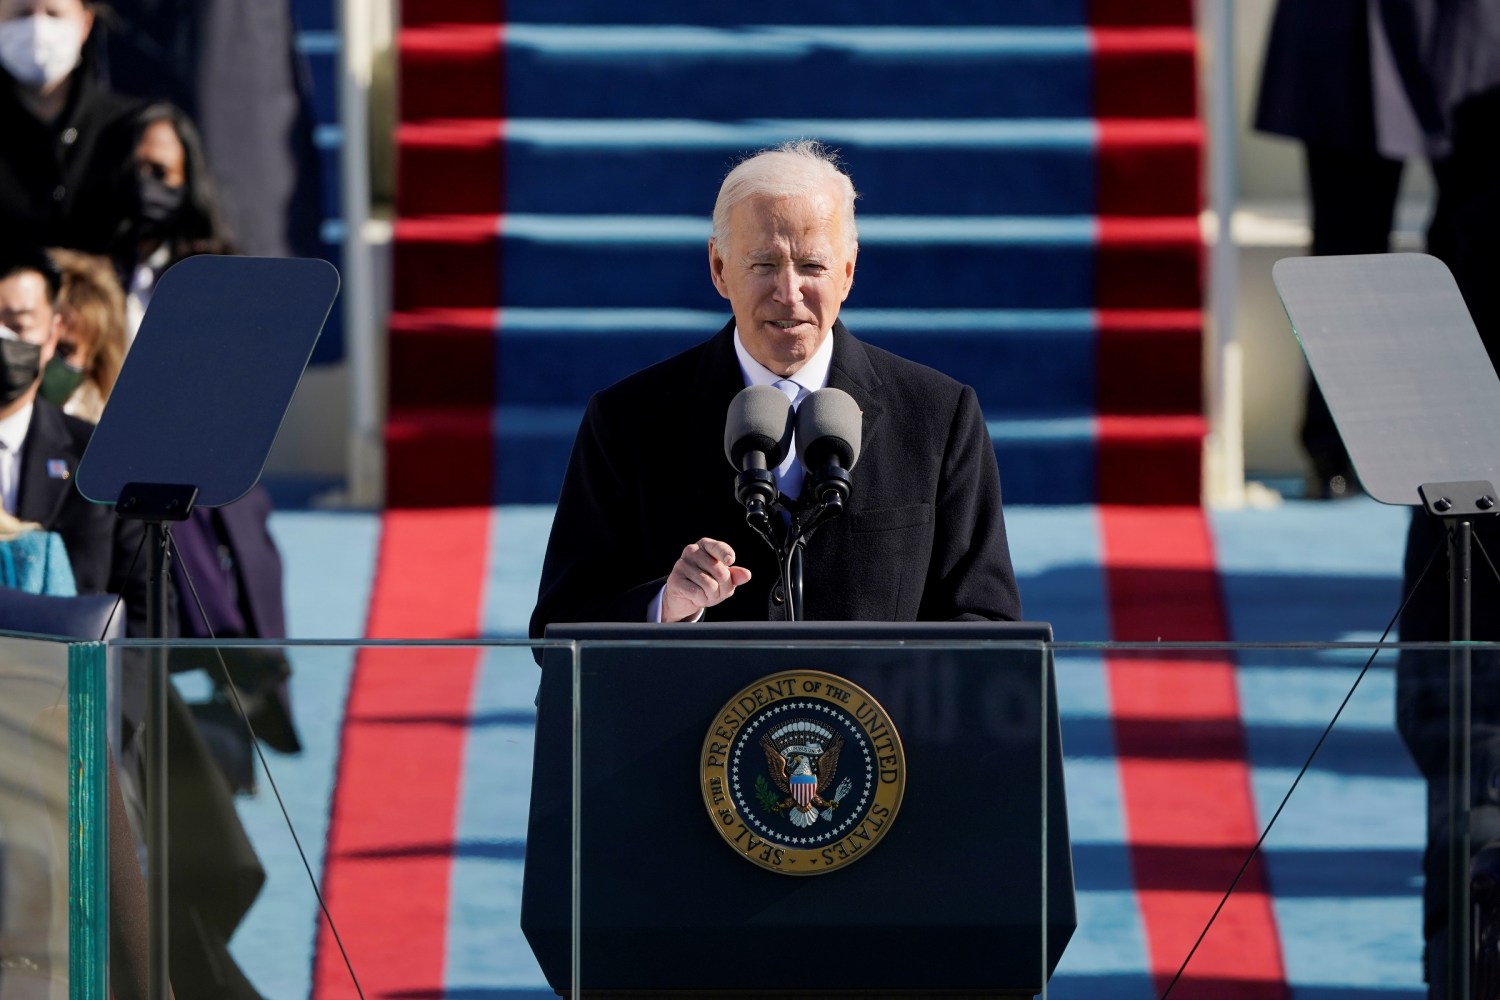 U.S. President Joe Biden speaks during the 59th Presidential Inauguration at the U.S. Capitol in Washington January 20, 2021. Patrick Semansky/Pool via REUTERS